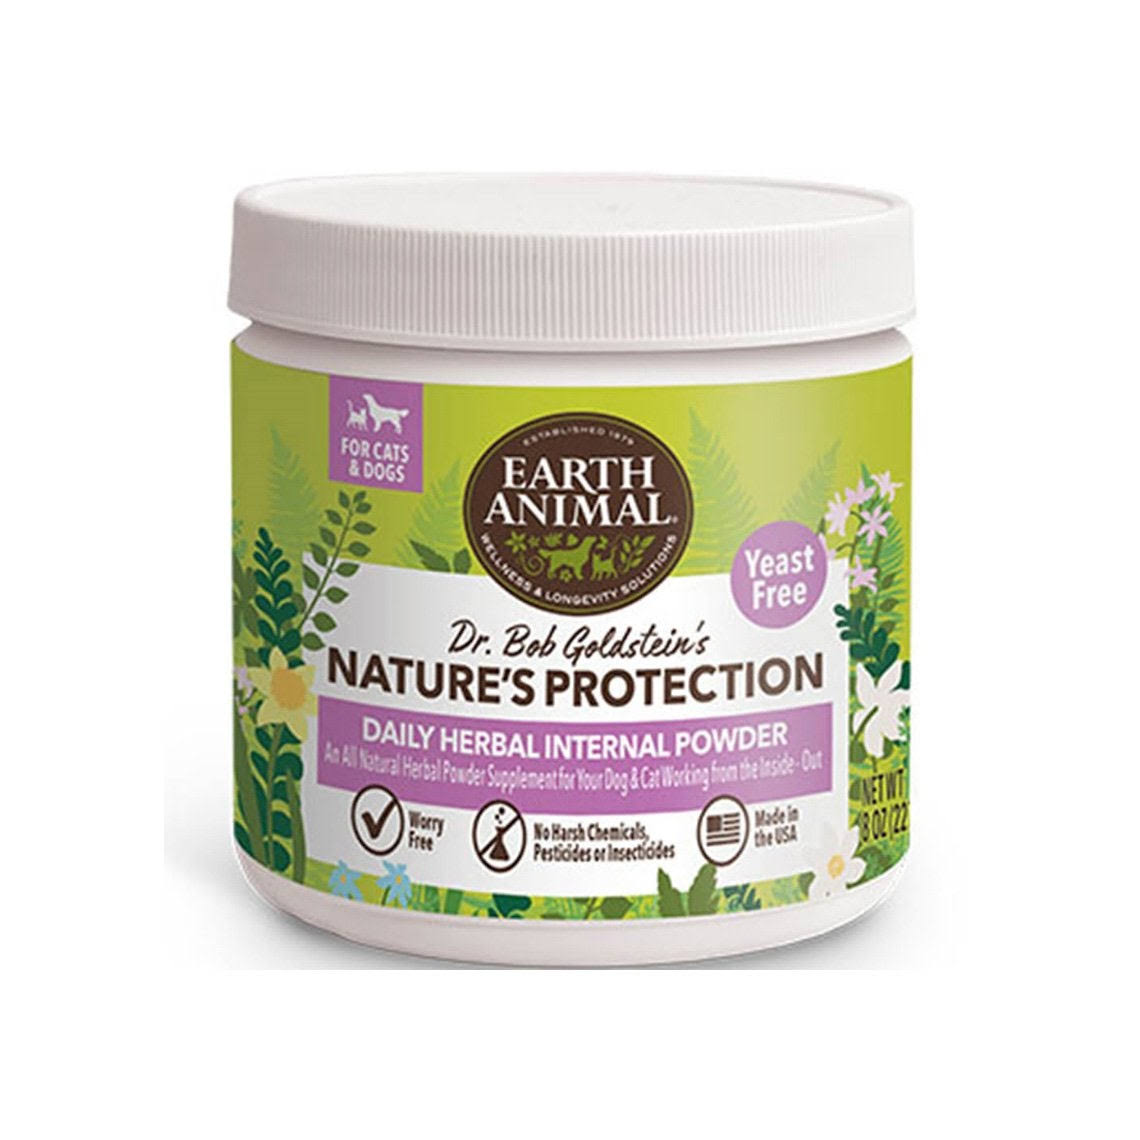 Earth Animal Flea & Tick Program Daily Herbal Internal Powder